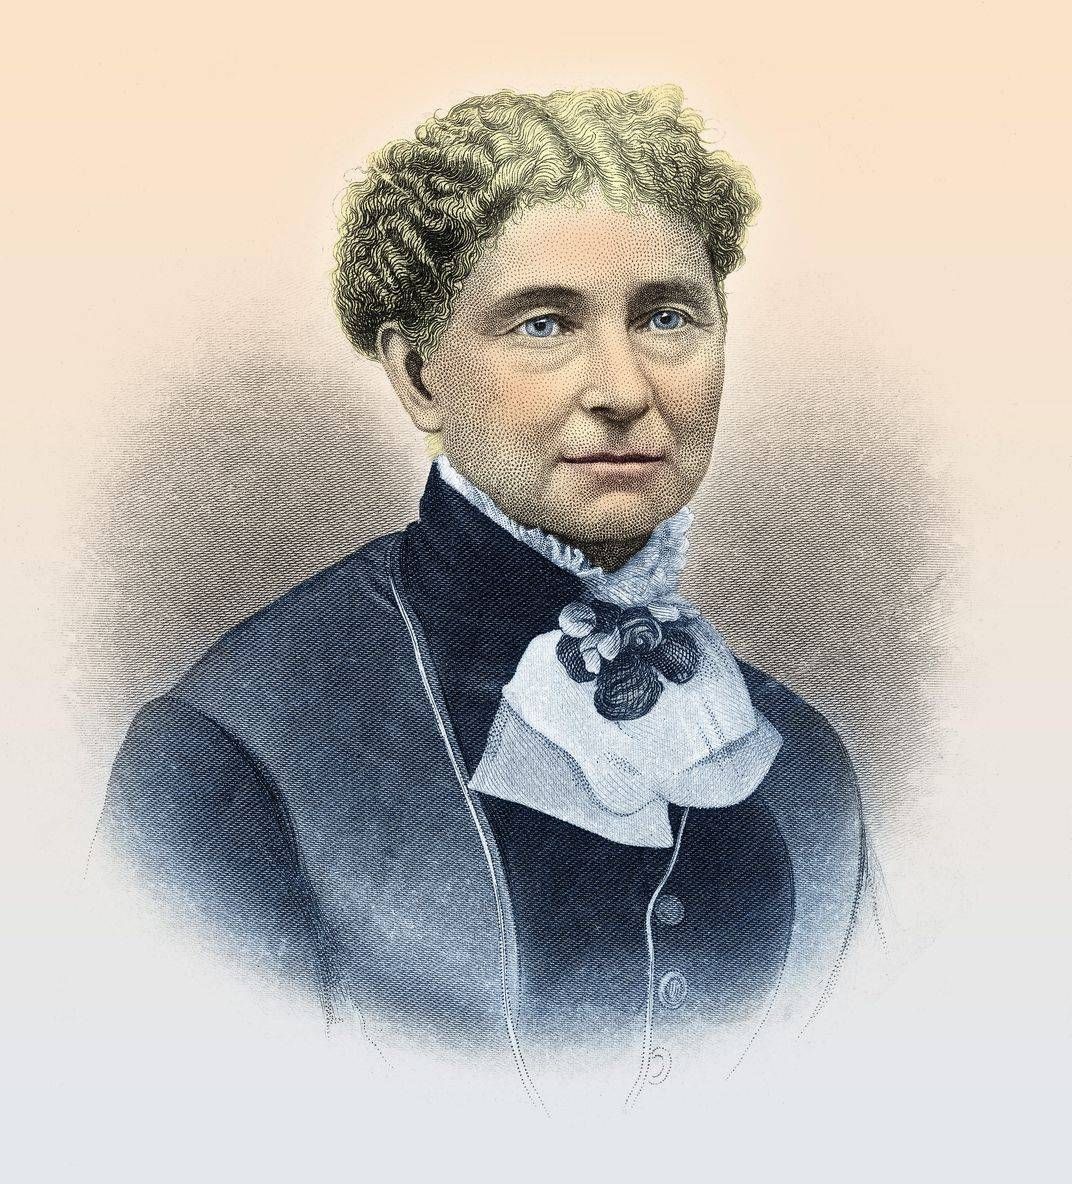 Amelia Jenks Bloomer, inventor of women's turn-of-the-century bloomers.